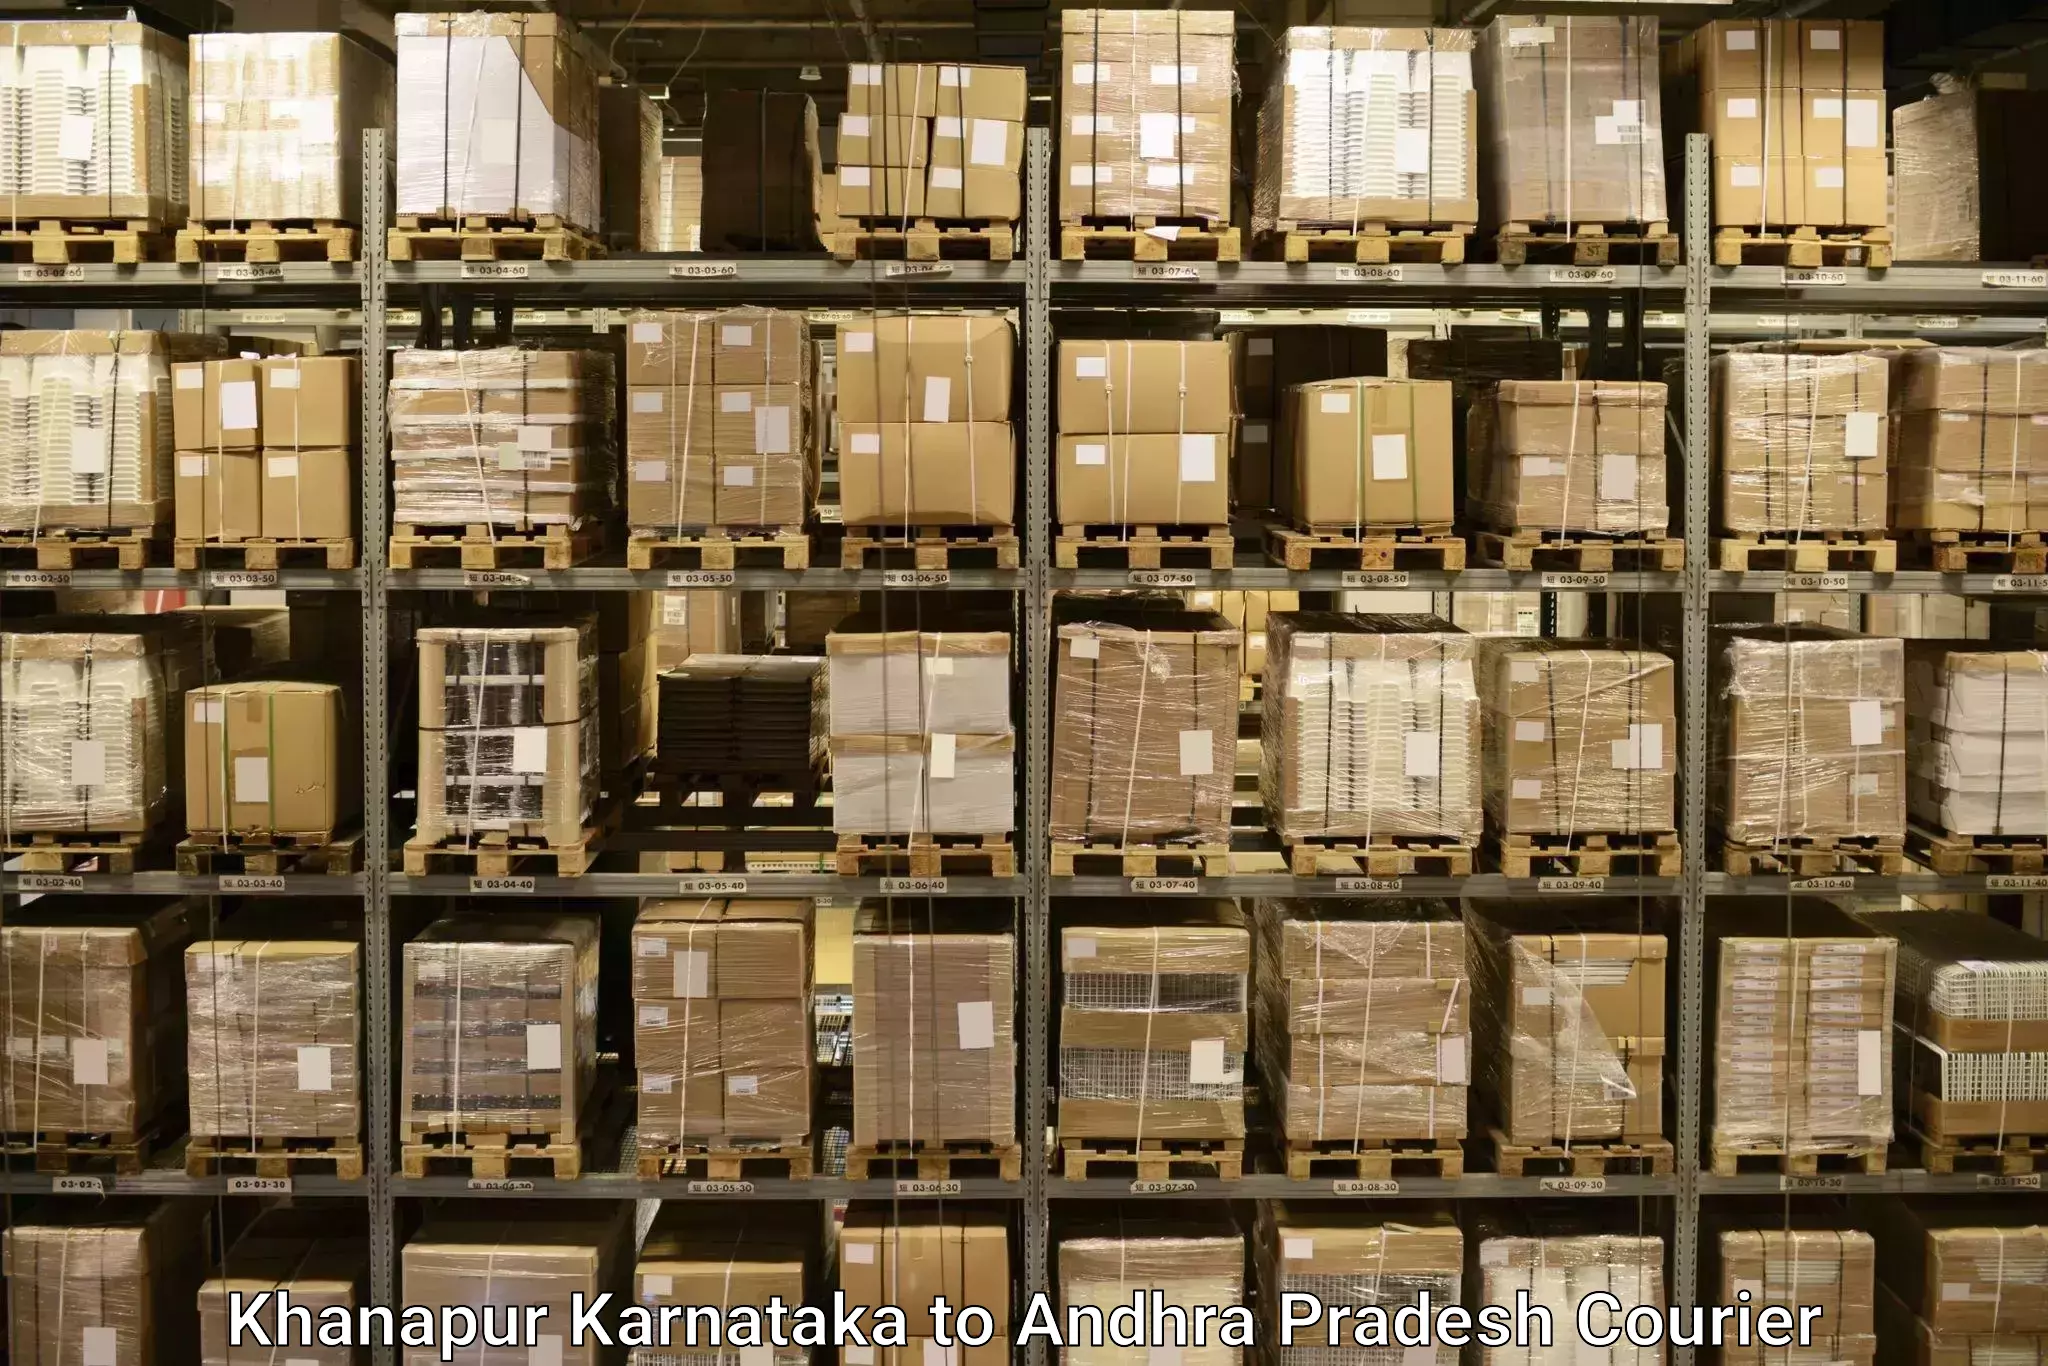 Reliable luggage courier Khanapur Karnataka to Tripuranthakam